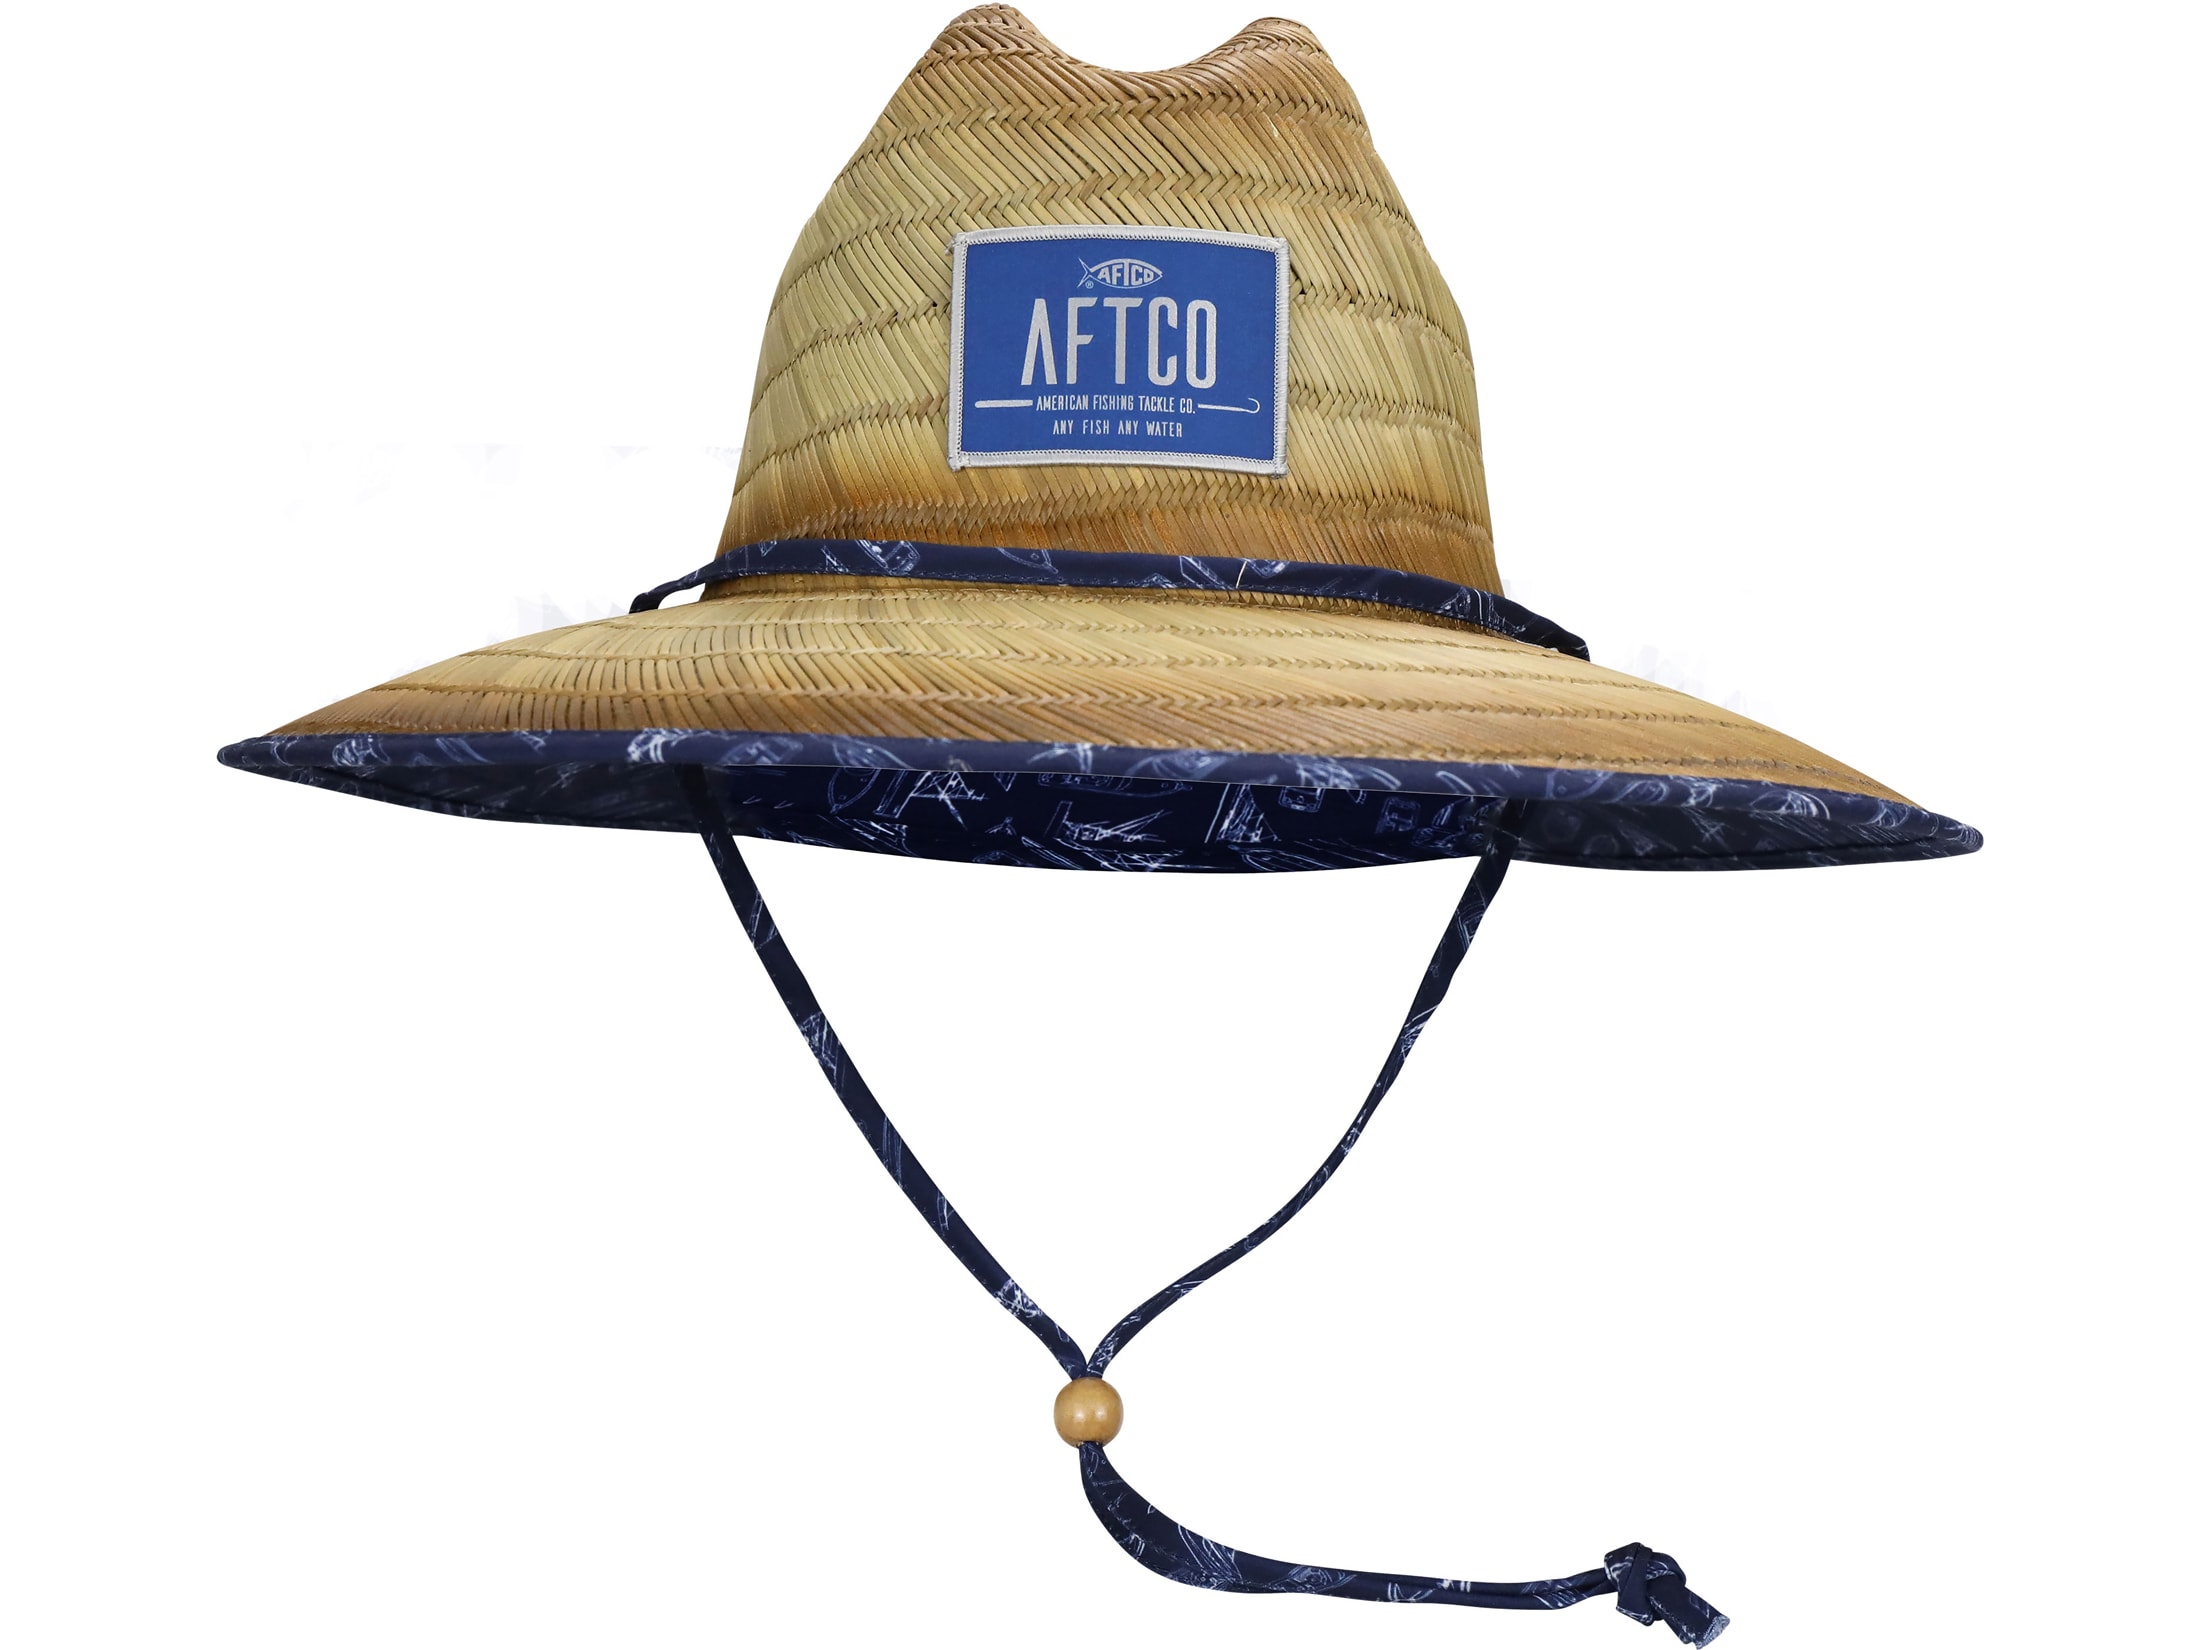 AFTCO Men's Gazebo Straw Hat Navy One Size Fits Most